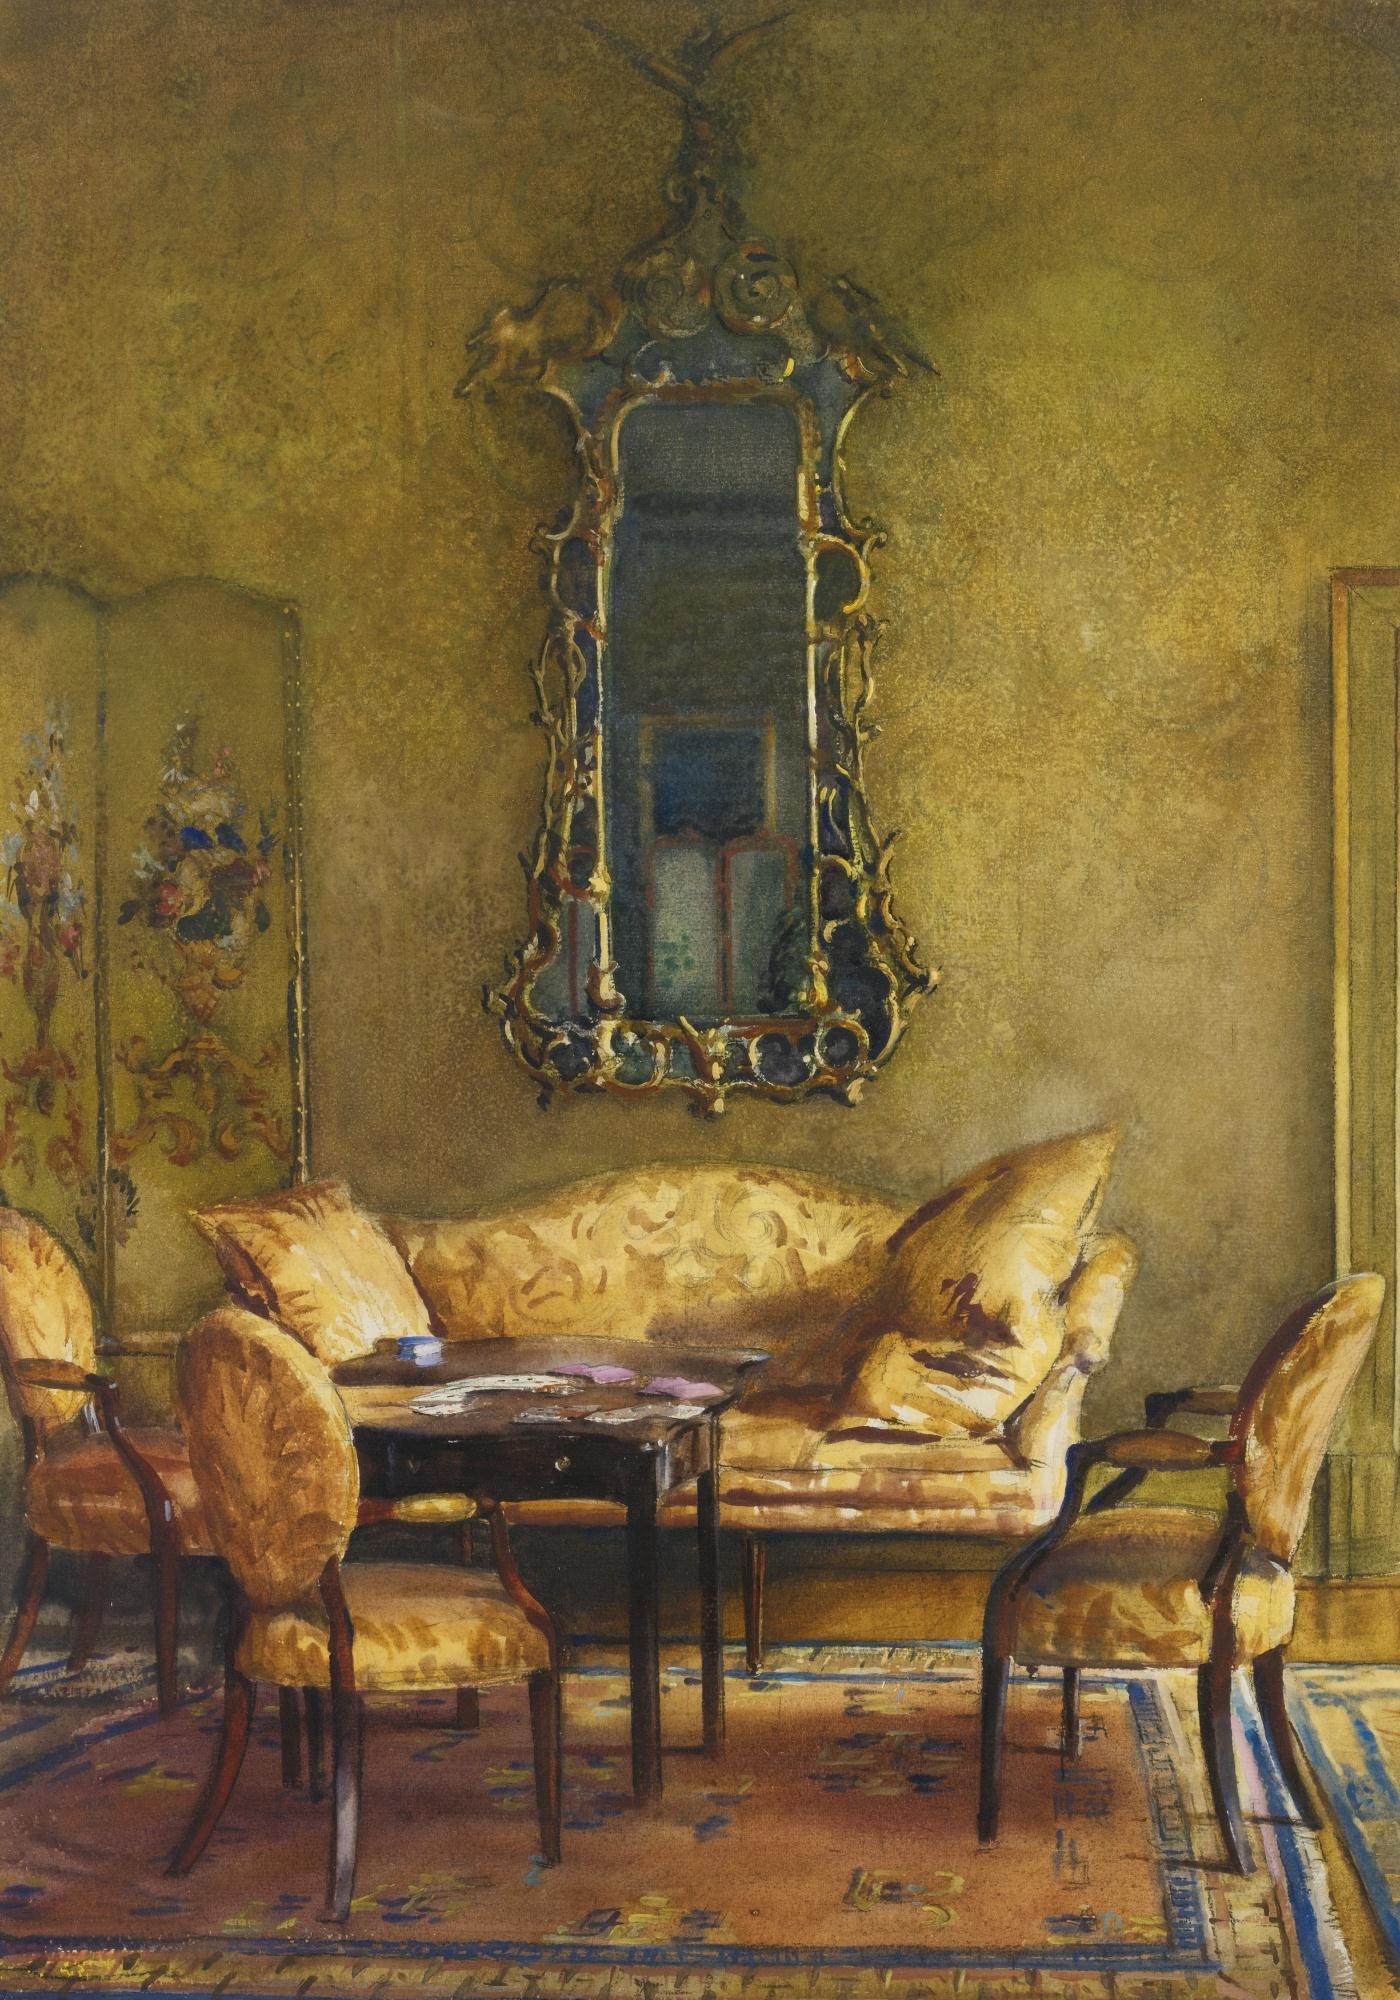 An Elegant Interior by Walter Gay, 1914